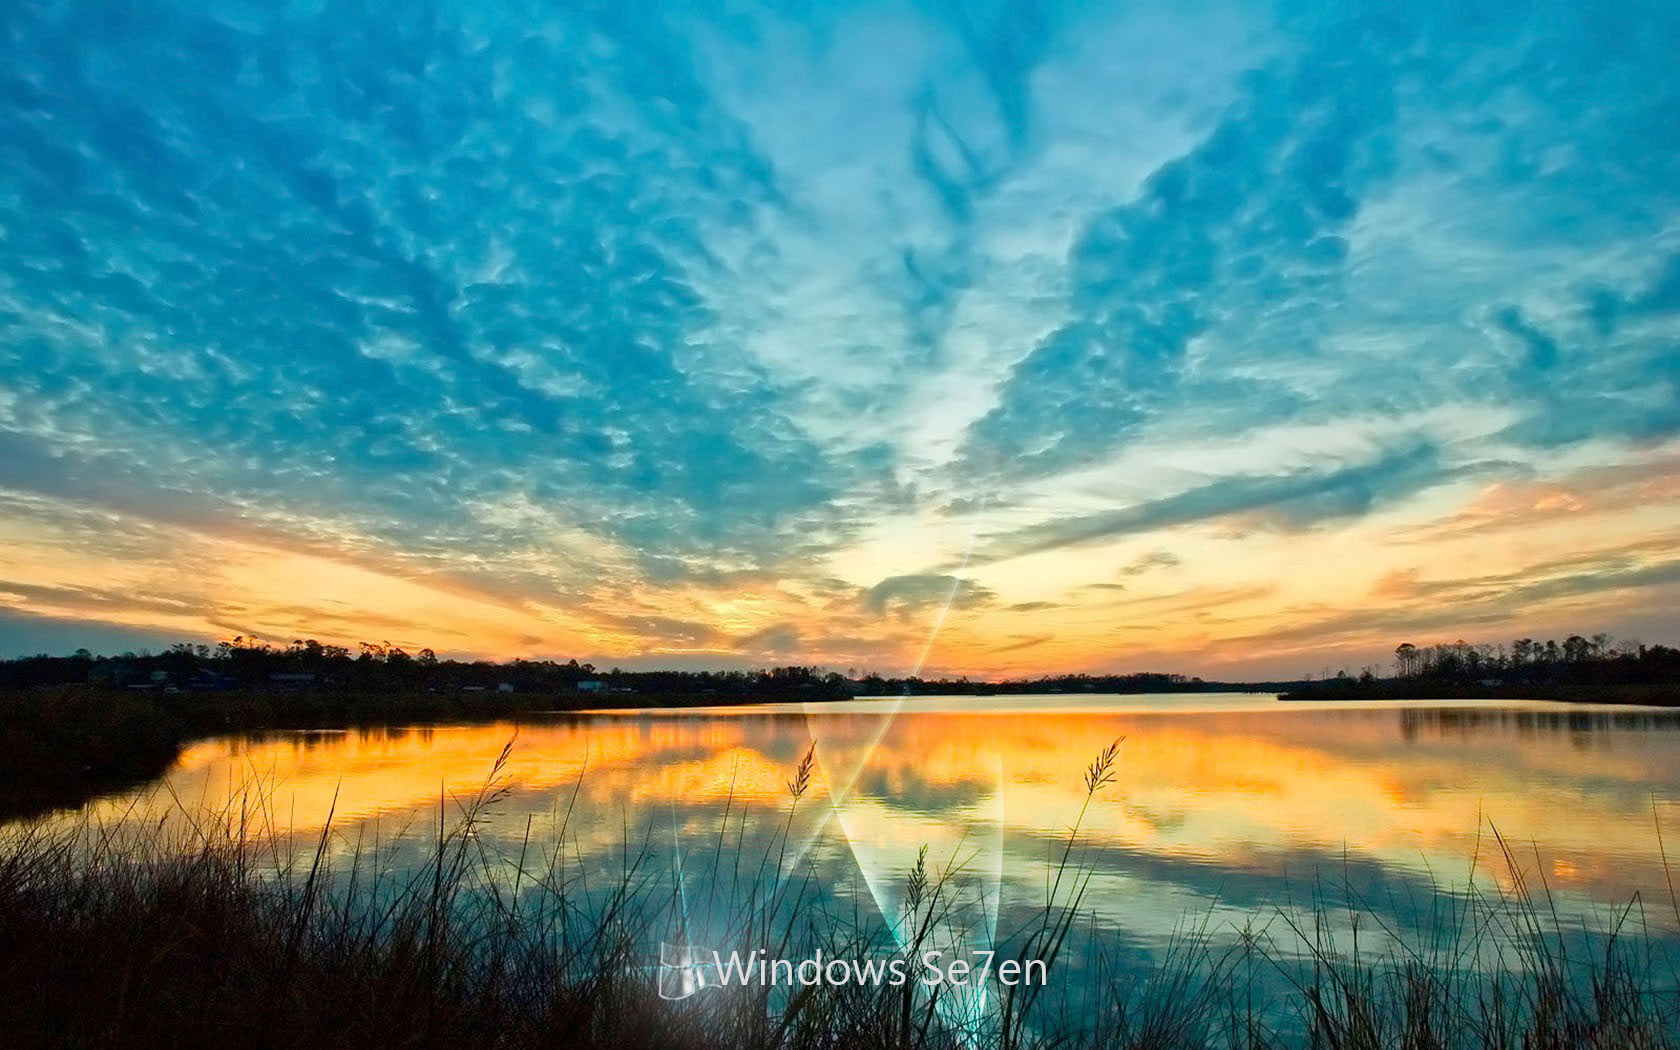 Free download Windows 7 64 bit HD Wallpaper High Quality